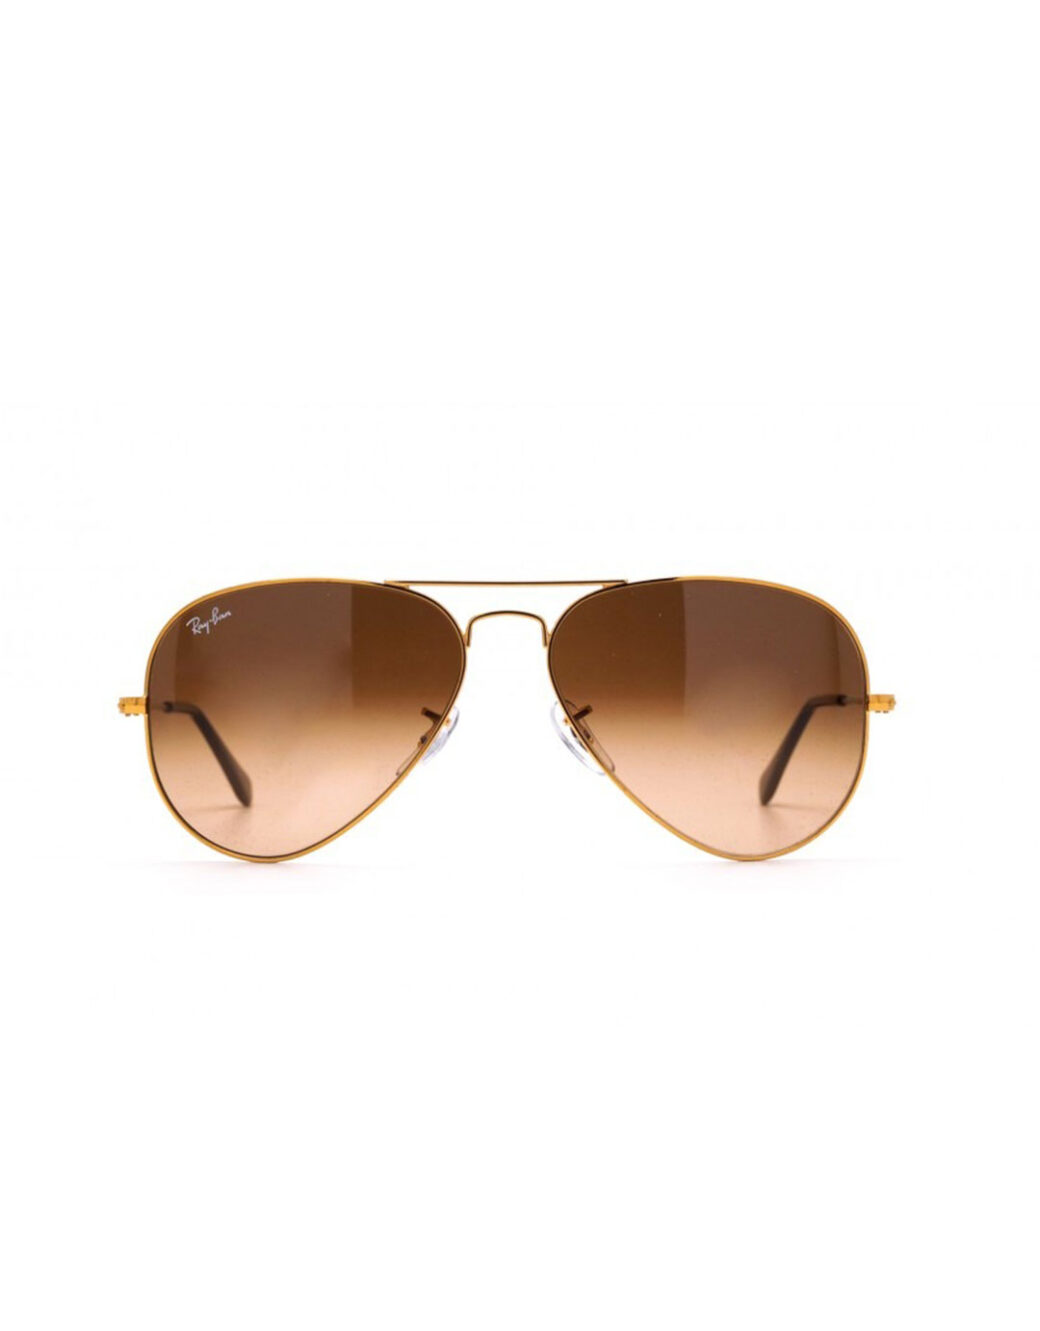 Ray ban Sunglasses - Shop Men Sunglasses from UAE Optics - uaeoptics.com